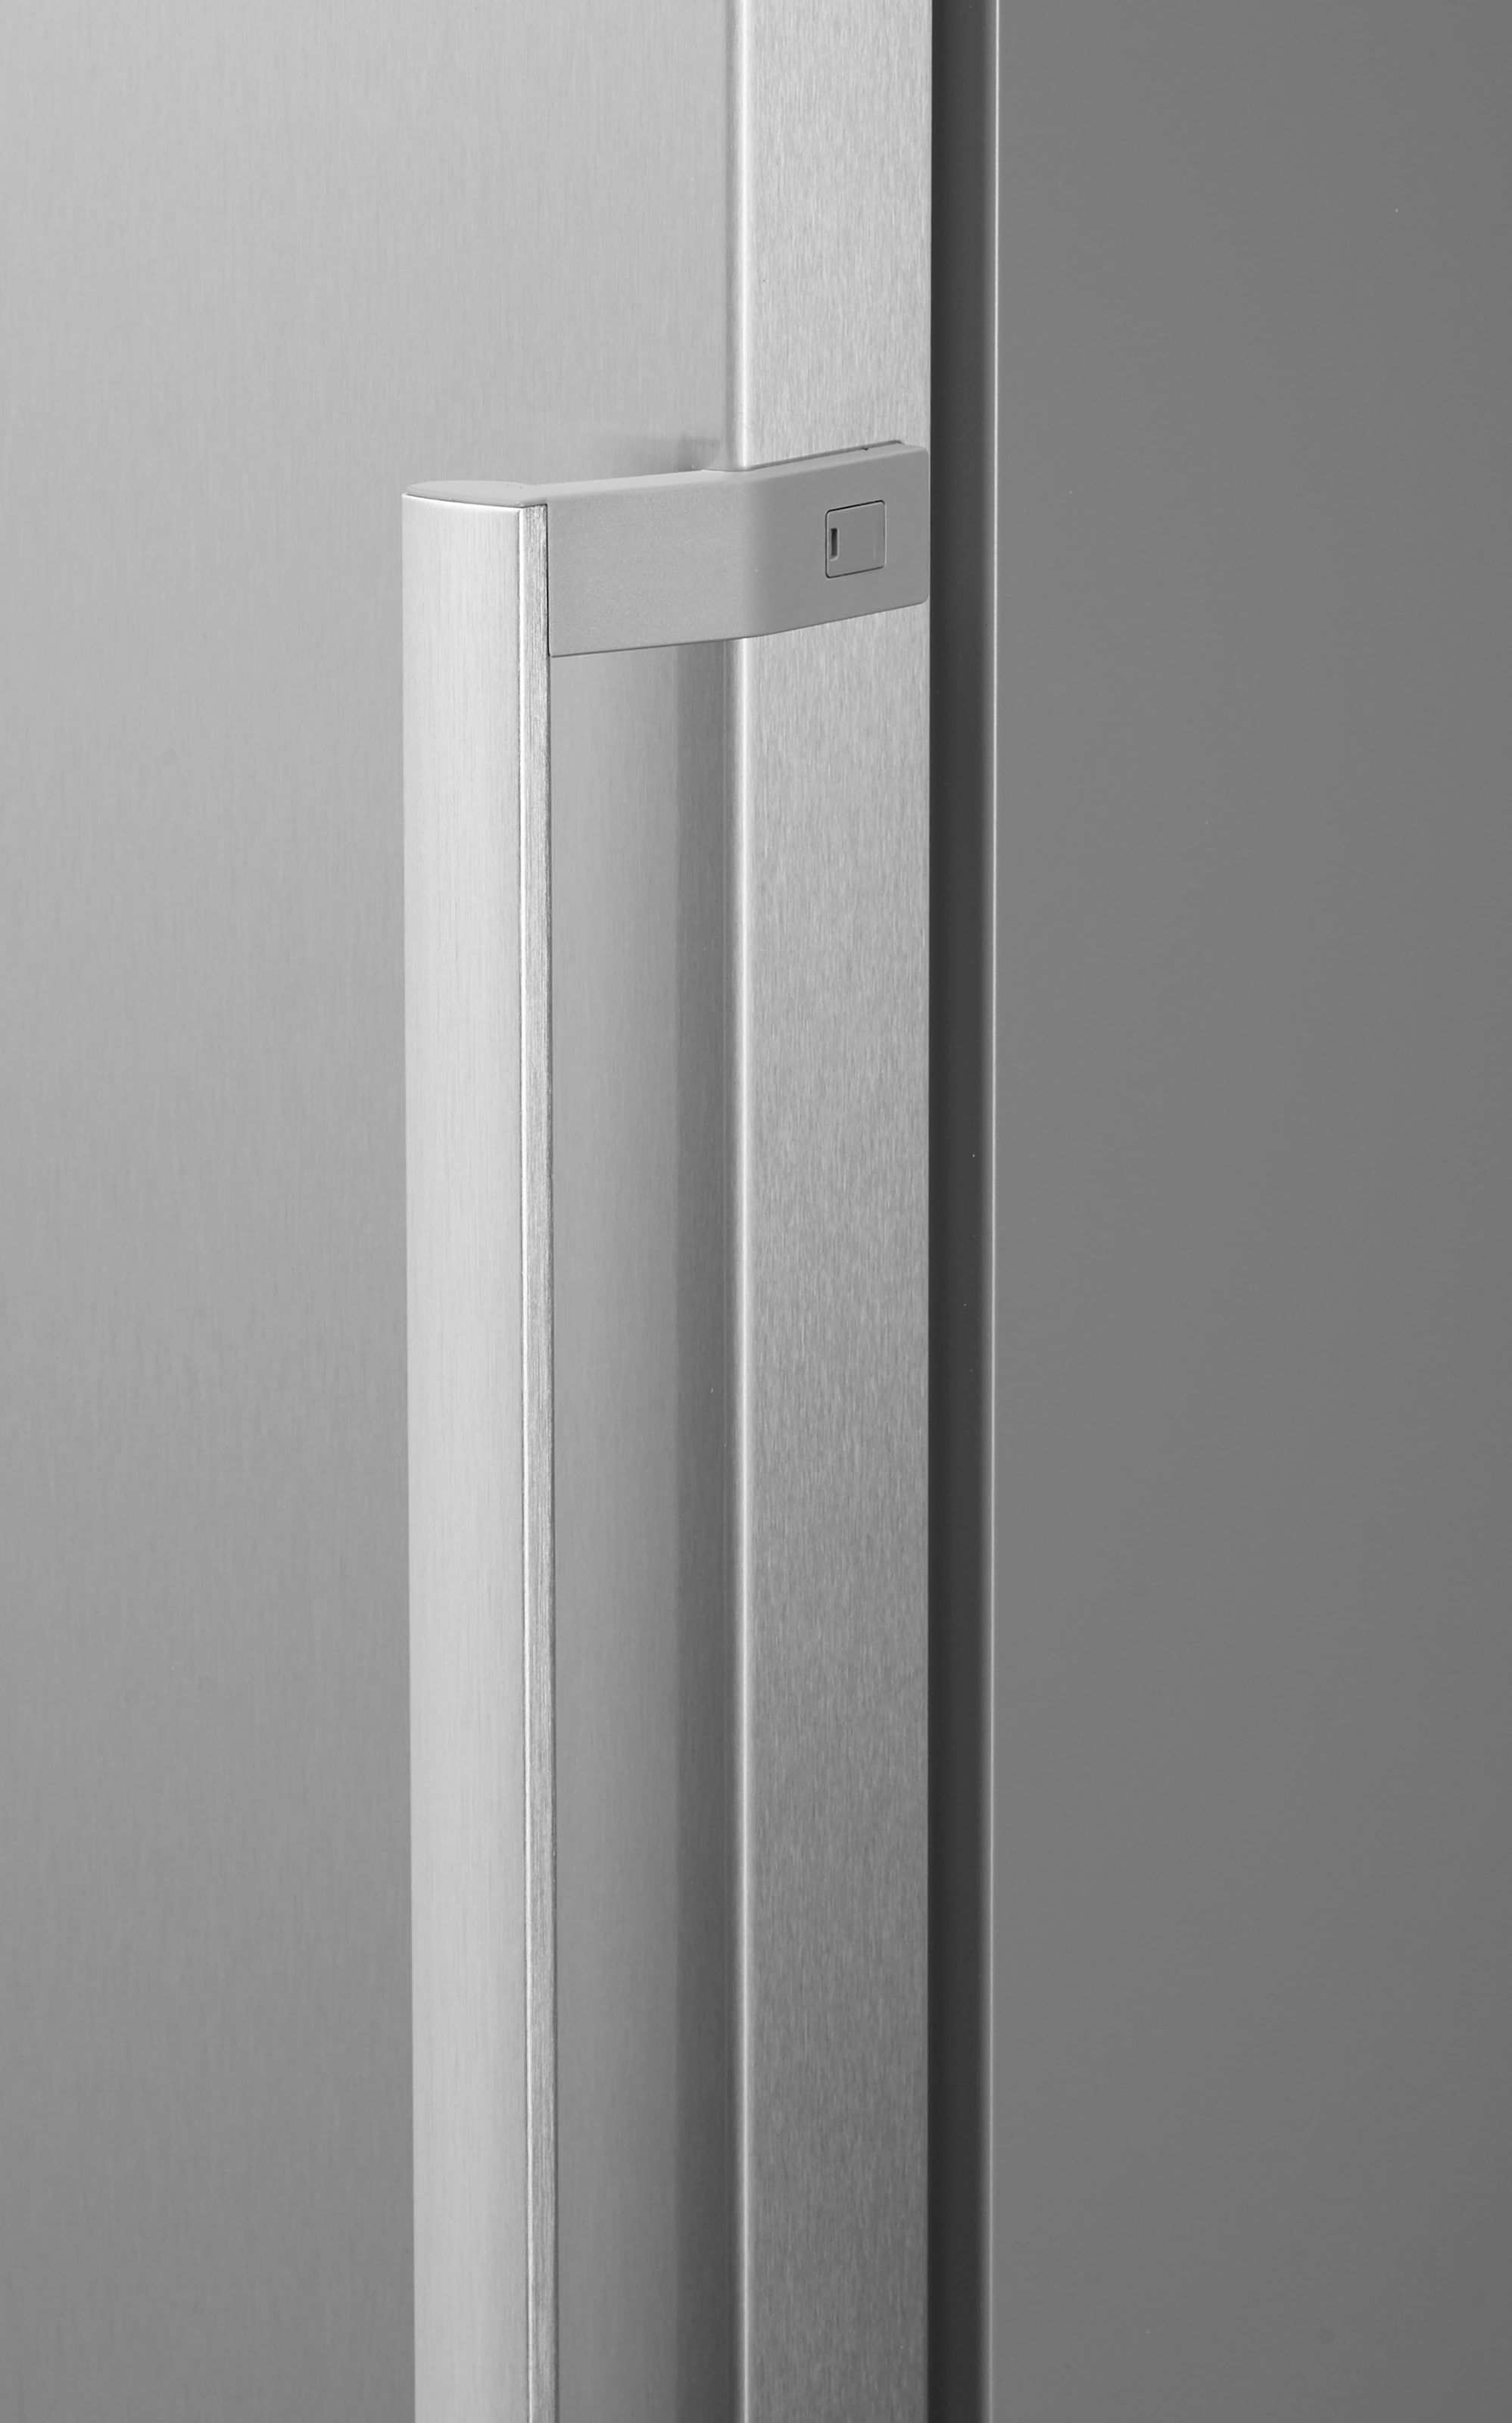 BOSCH Kühlschrank »KSV36BIEP«, KSV36BIEP, 186 cm hoch, 60 cm breit